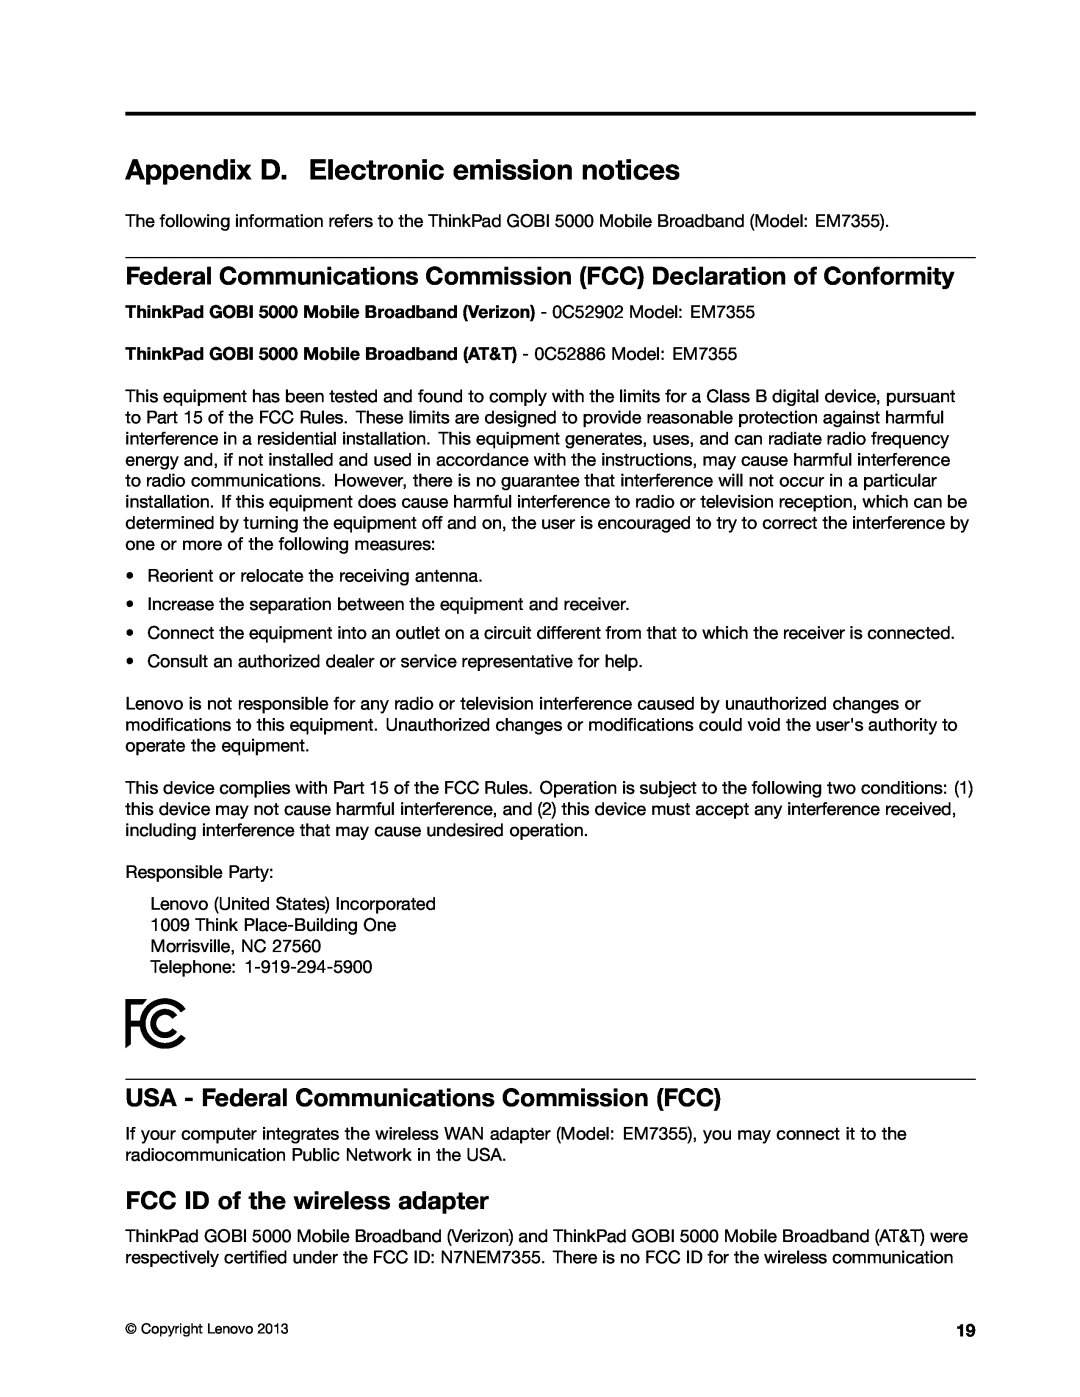 Lenovo GOBI 5000 Appendix D. Electronic emission notices, Federal Communications Commission FCC Declaration of Conformity 